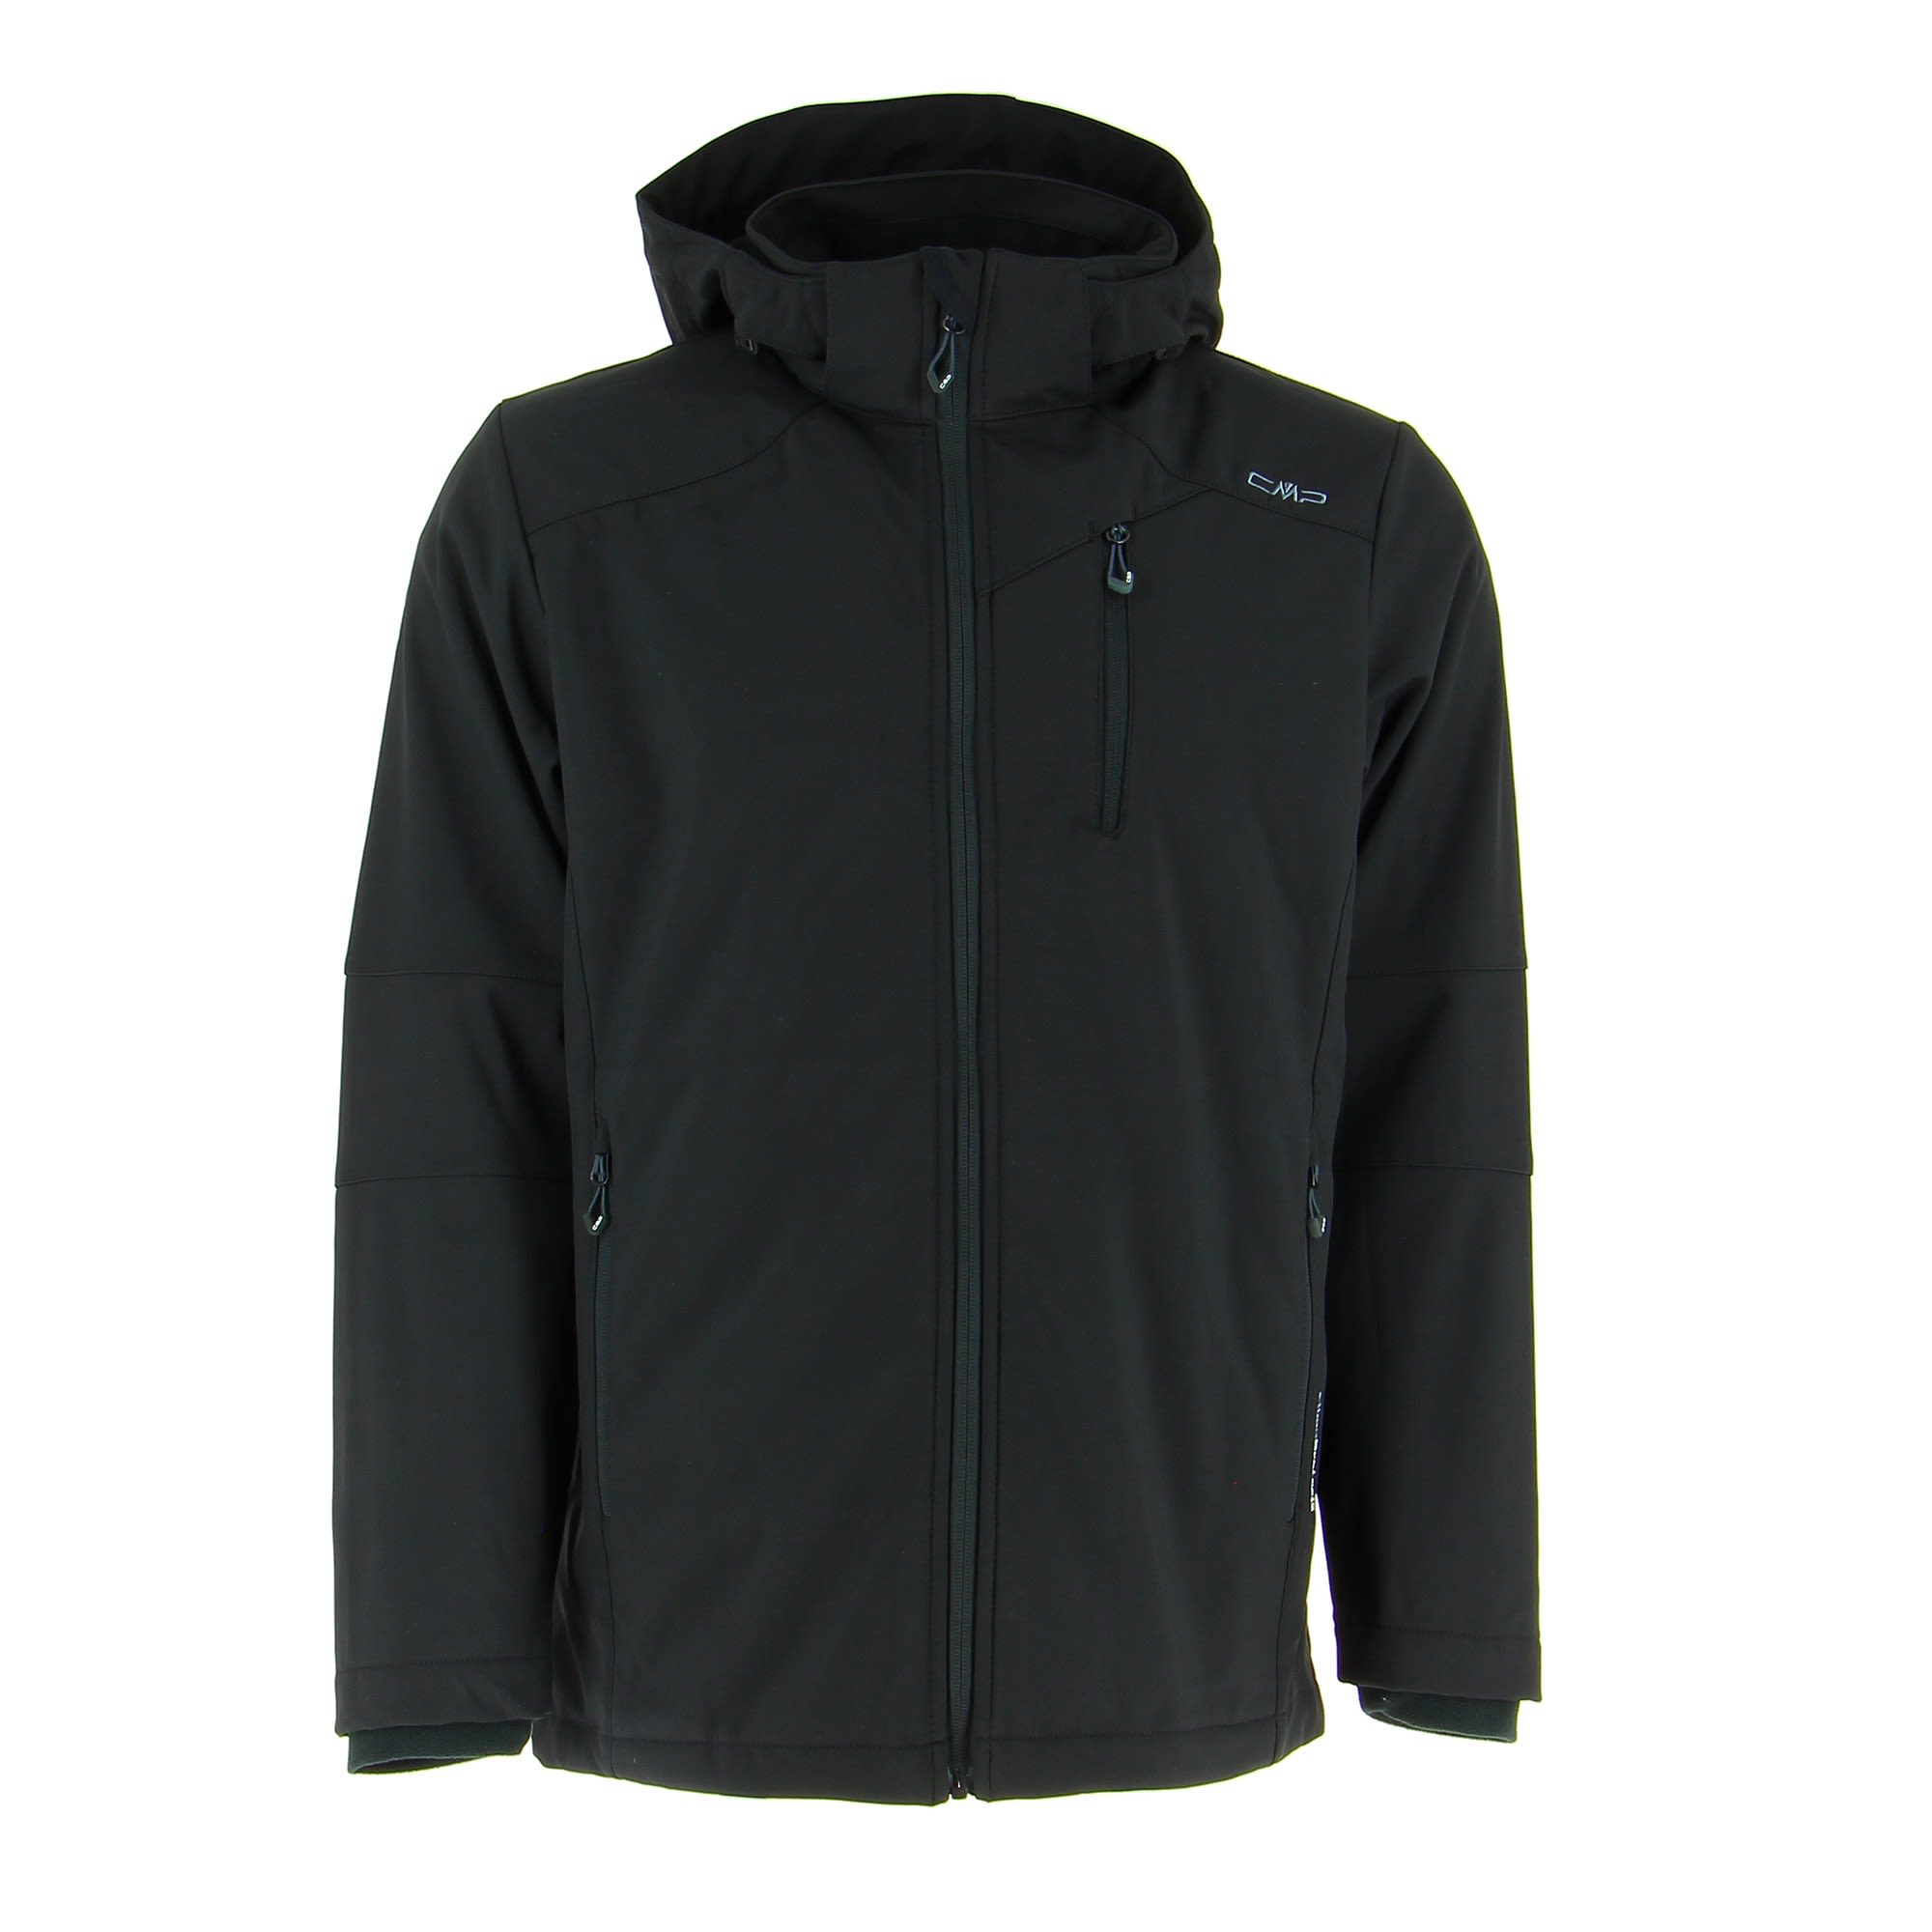 CMP Jacket Zip Hood Softshell Comfort FIt Long Male Softshelljacken- Grsse 52 - Farbe Nero unter CMP